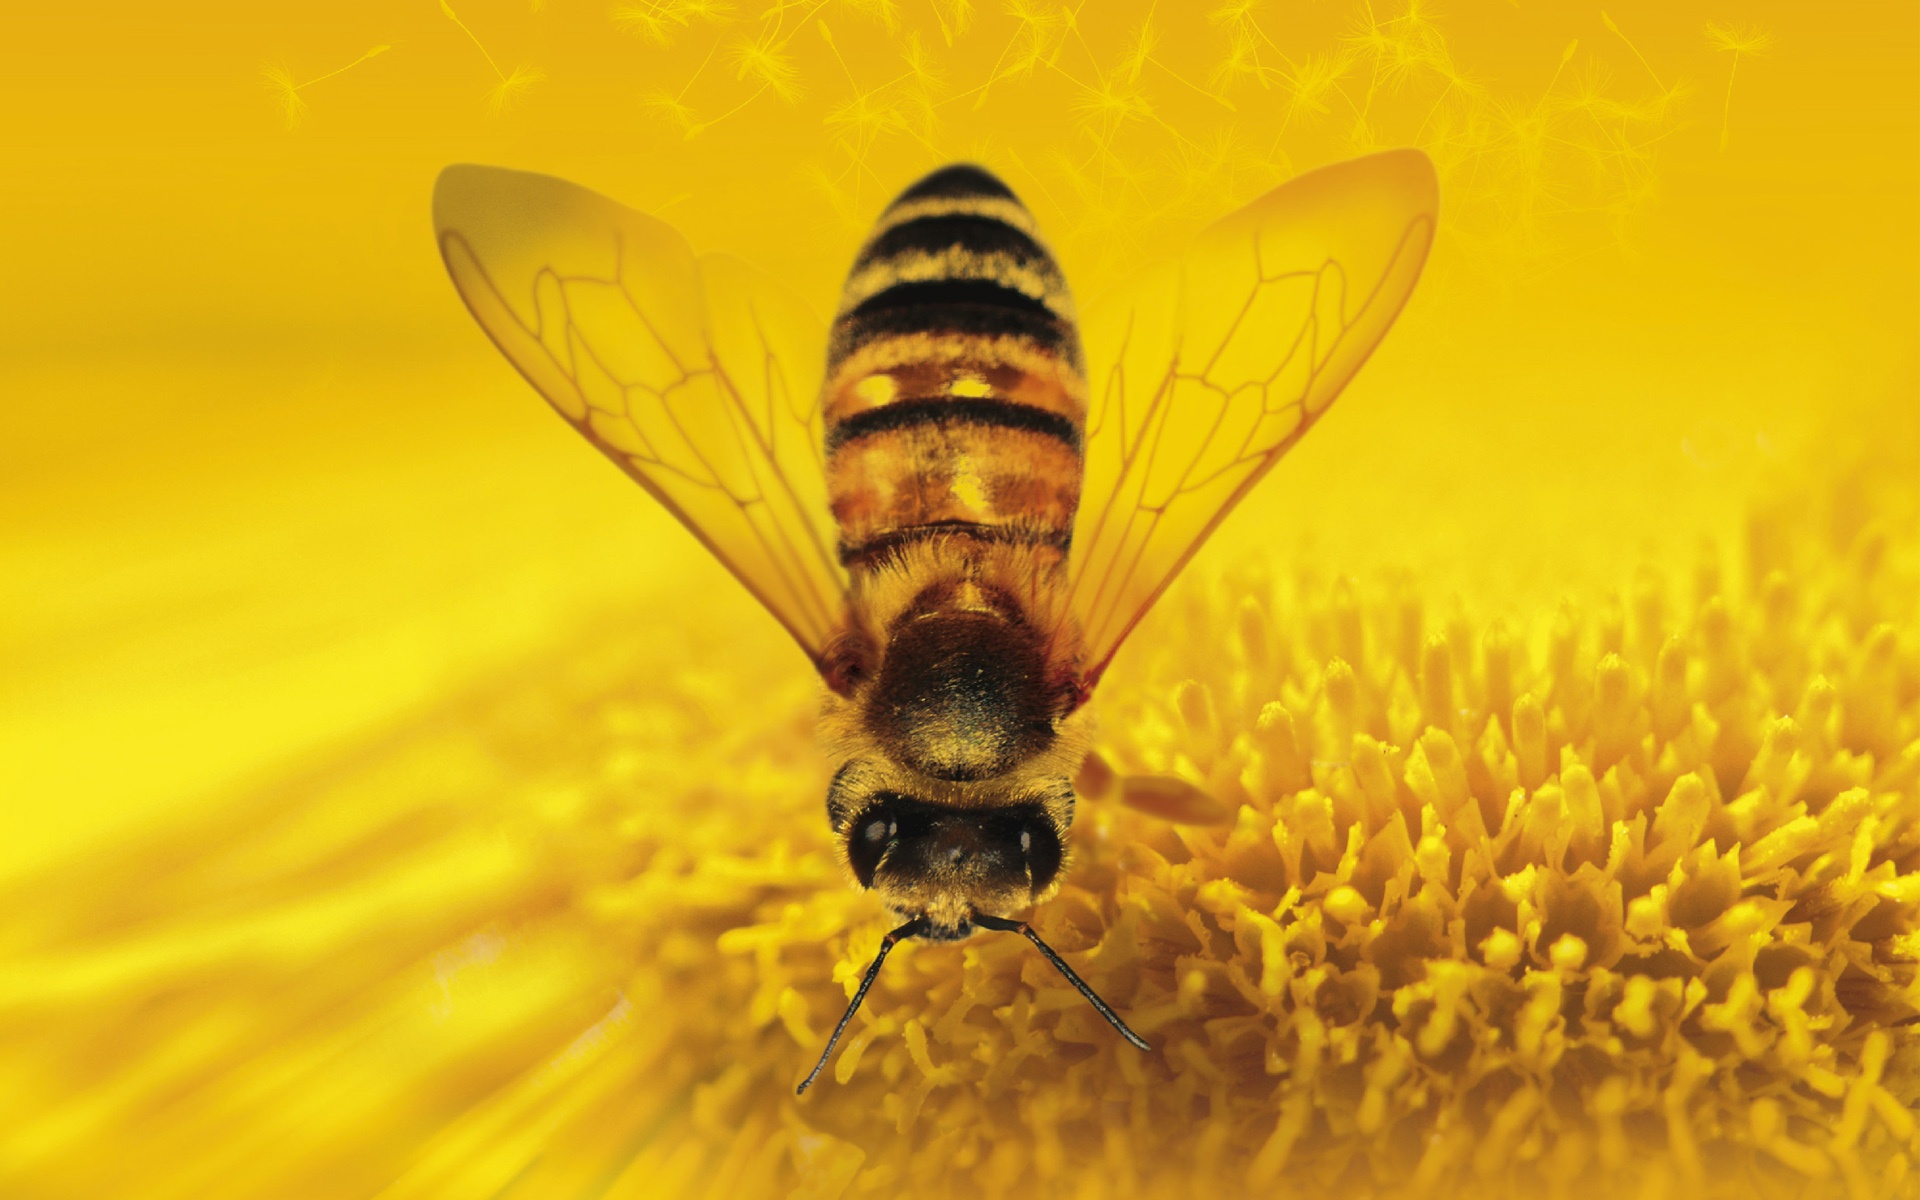 Фон для презентации пчелы